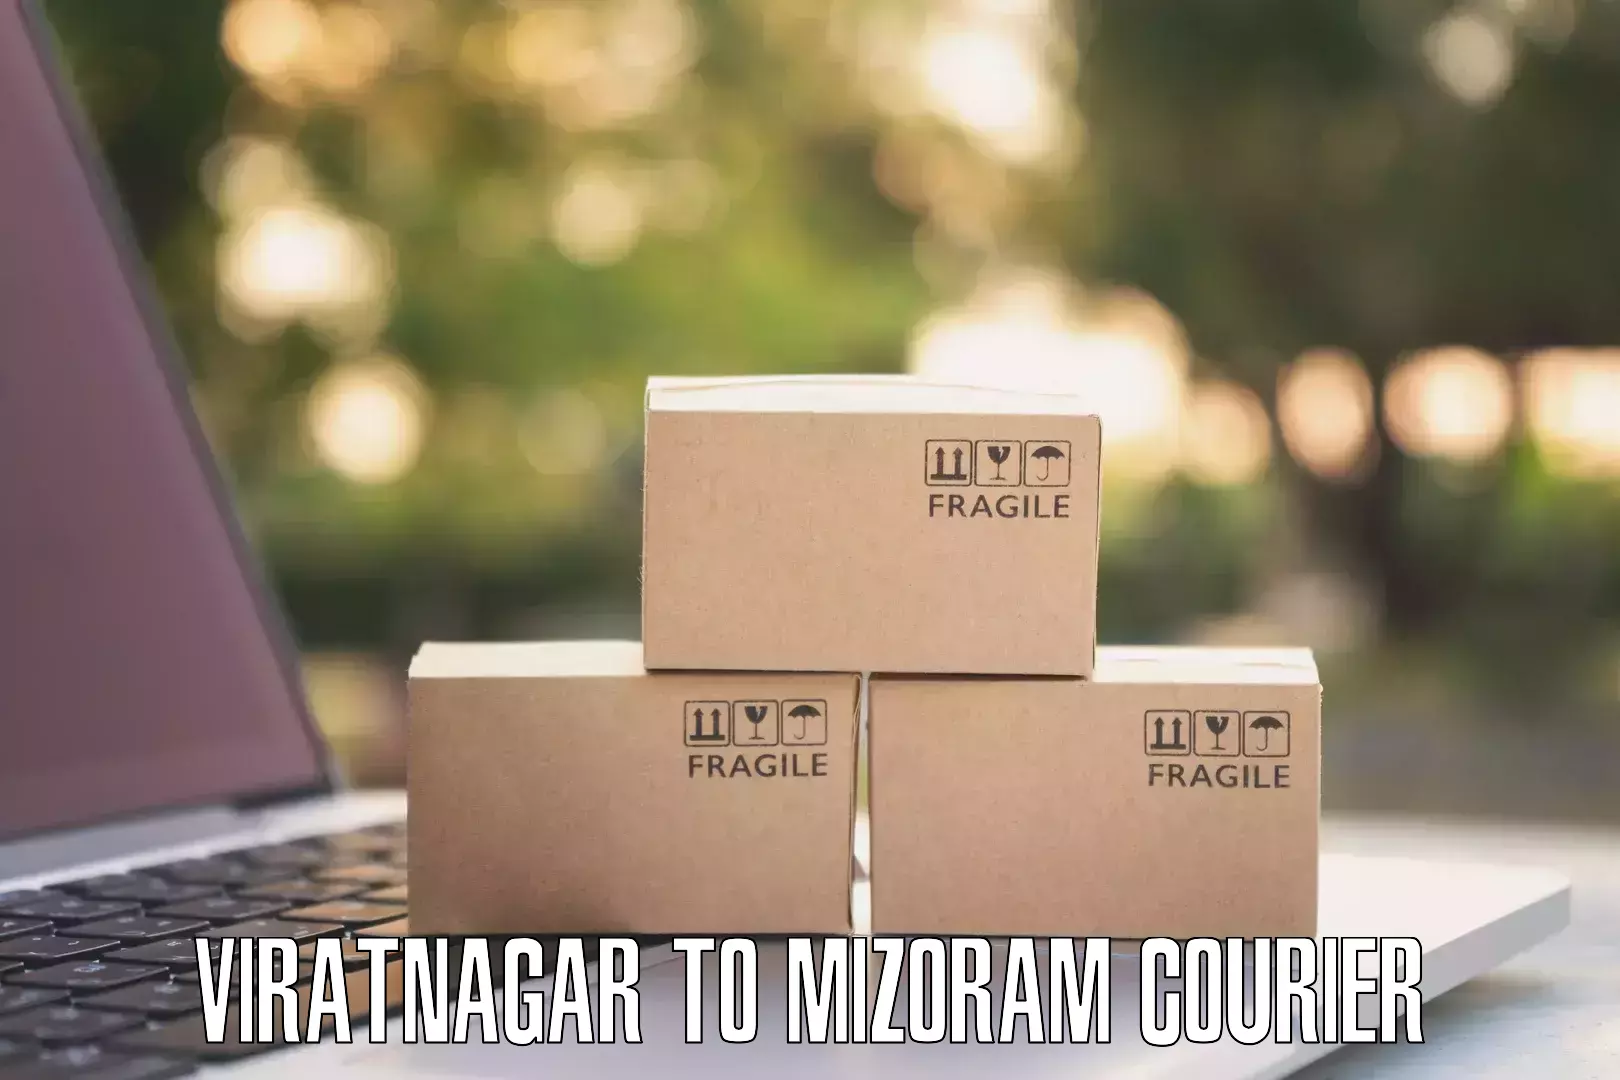 Courier app Viratnagar to Mizoram